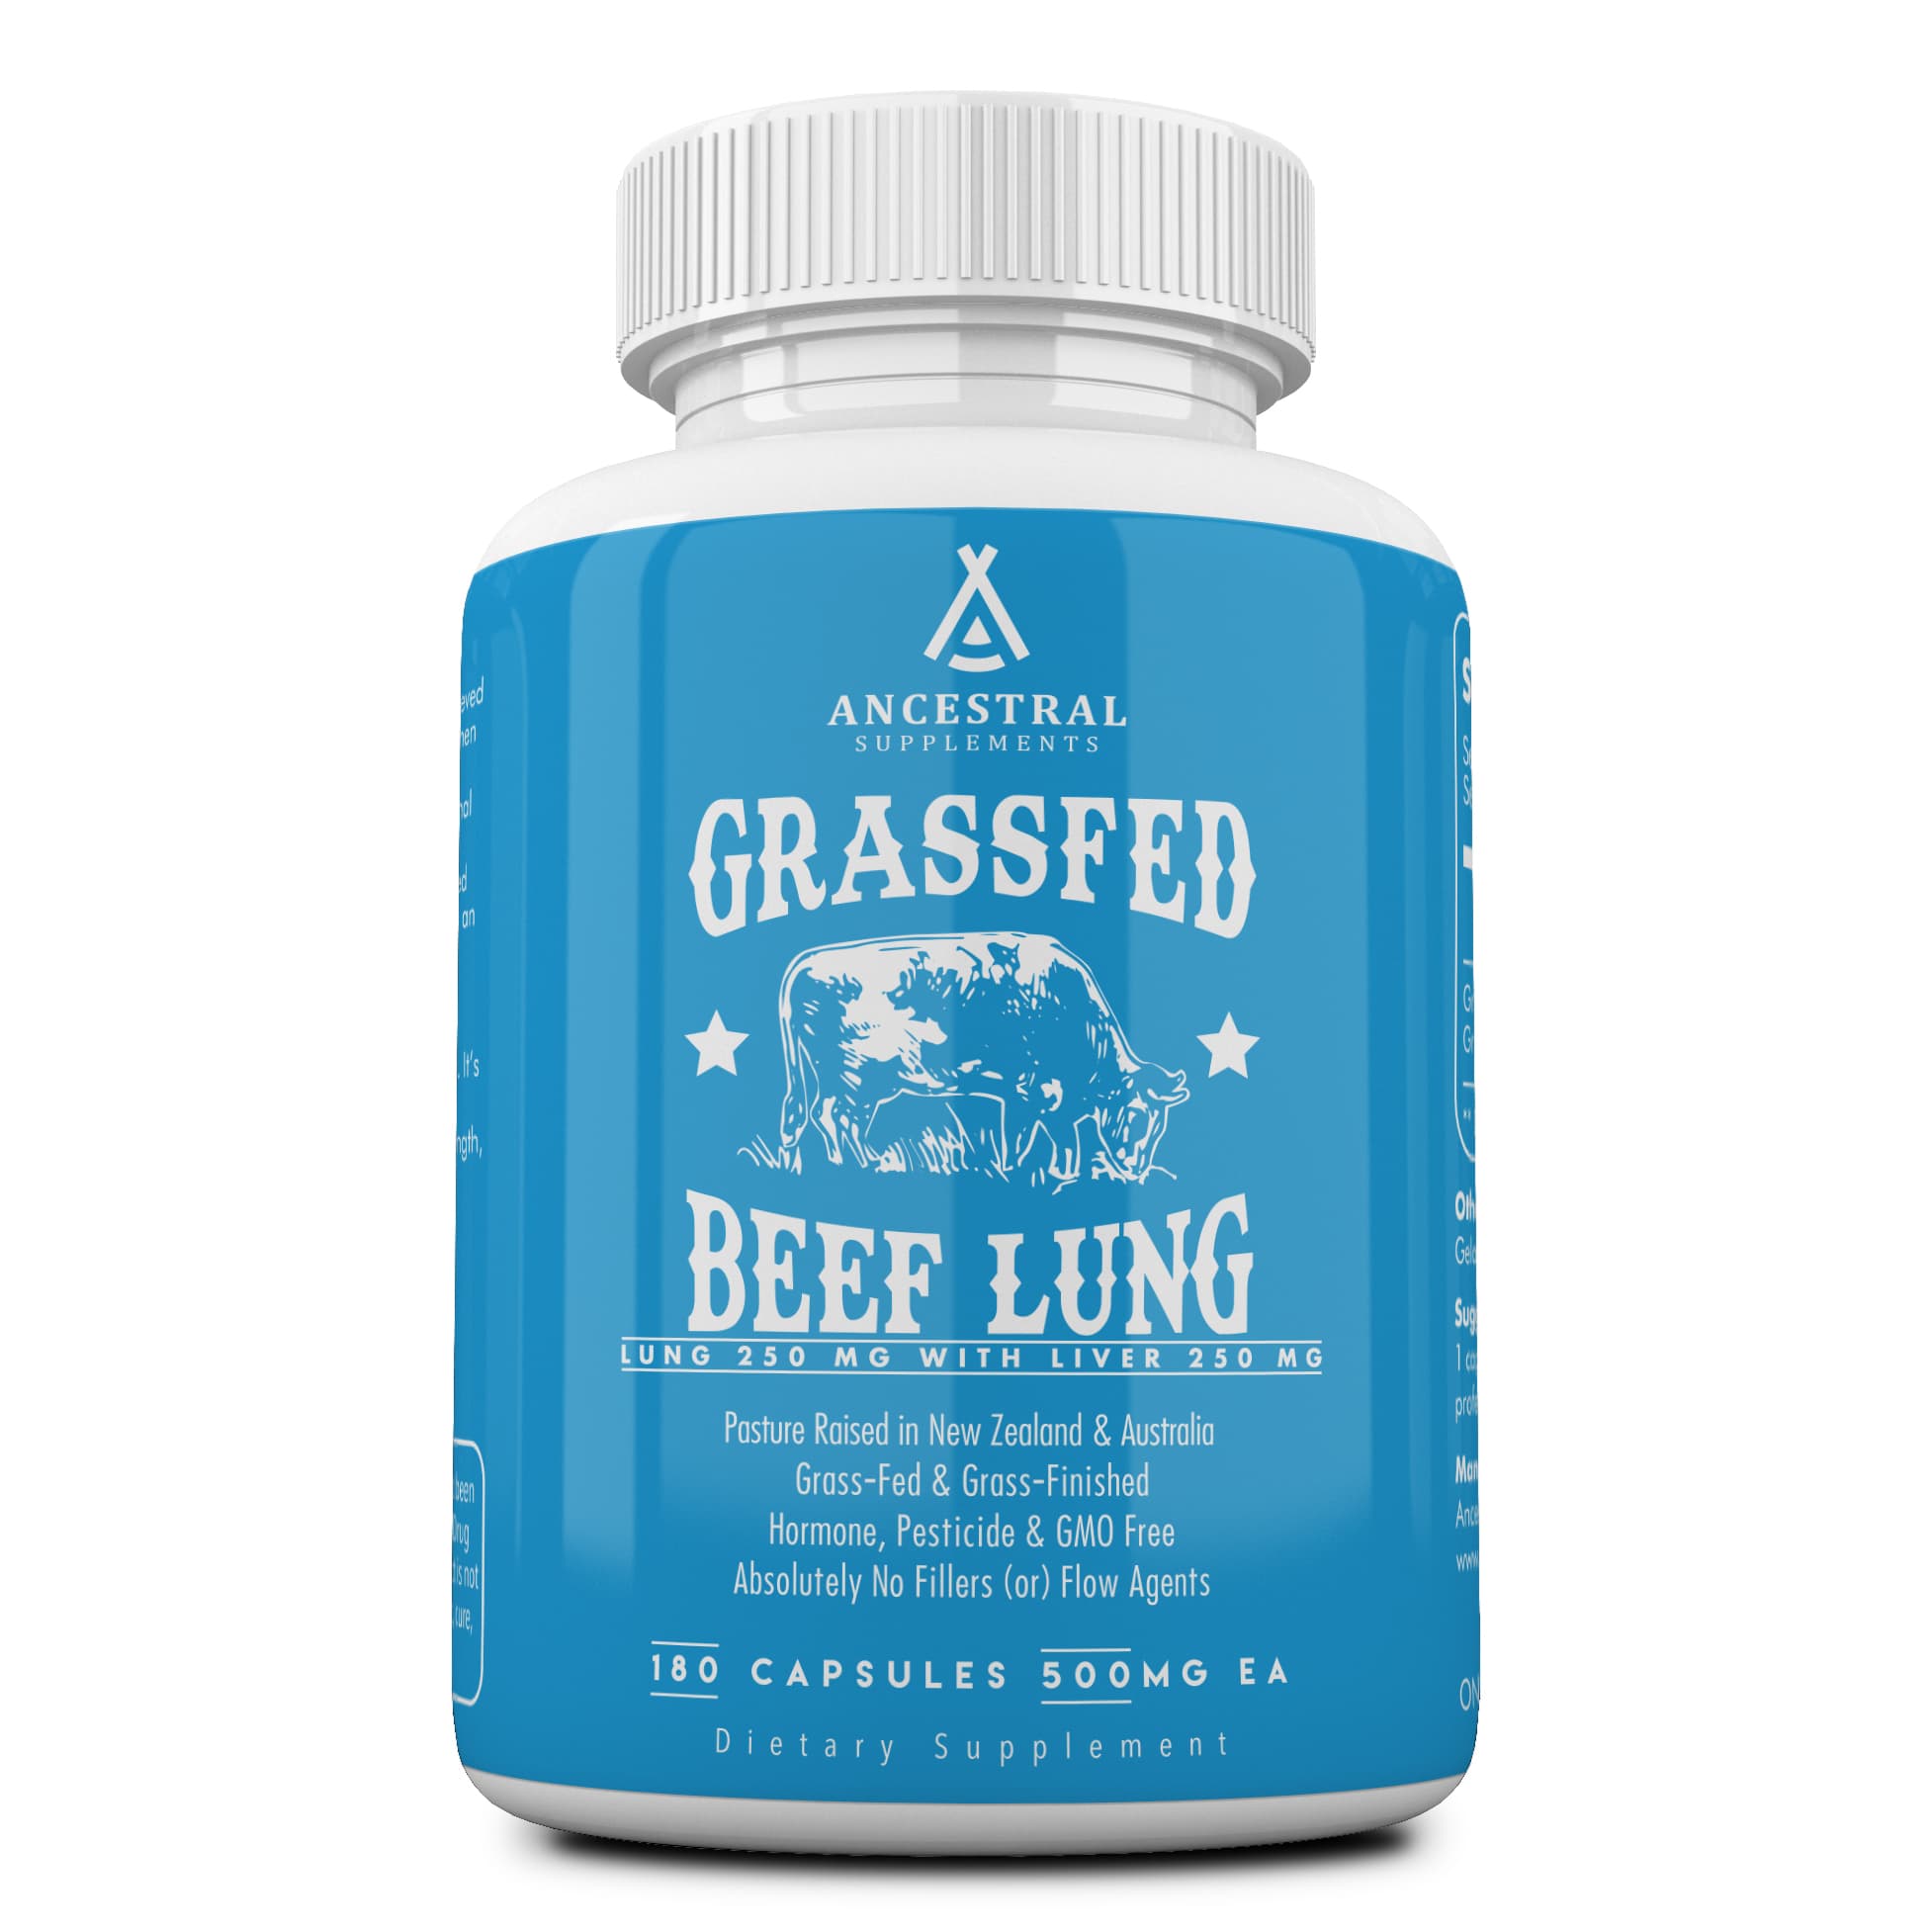 Ancestral Grassfed Beef Lung